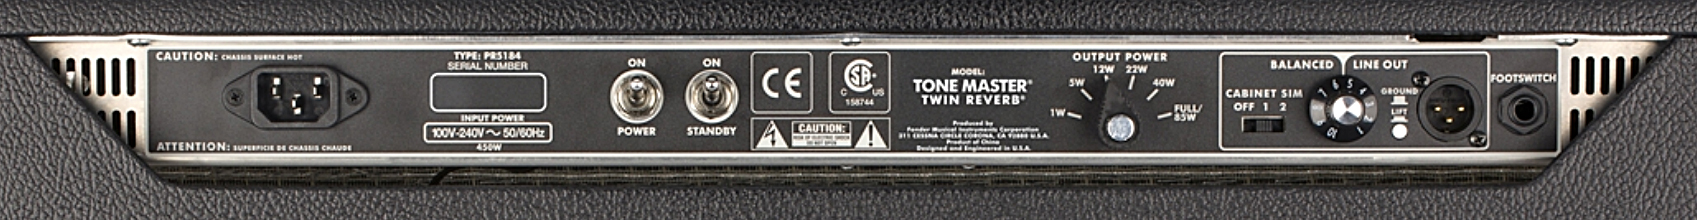 Fender Tone Master Twin Reverb 200w 2x12 - Combo für E-Gitarre - Variation 4